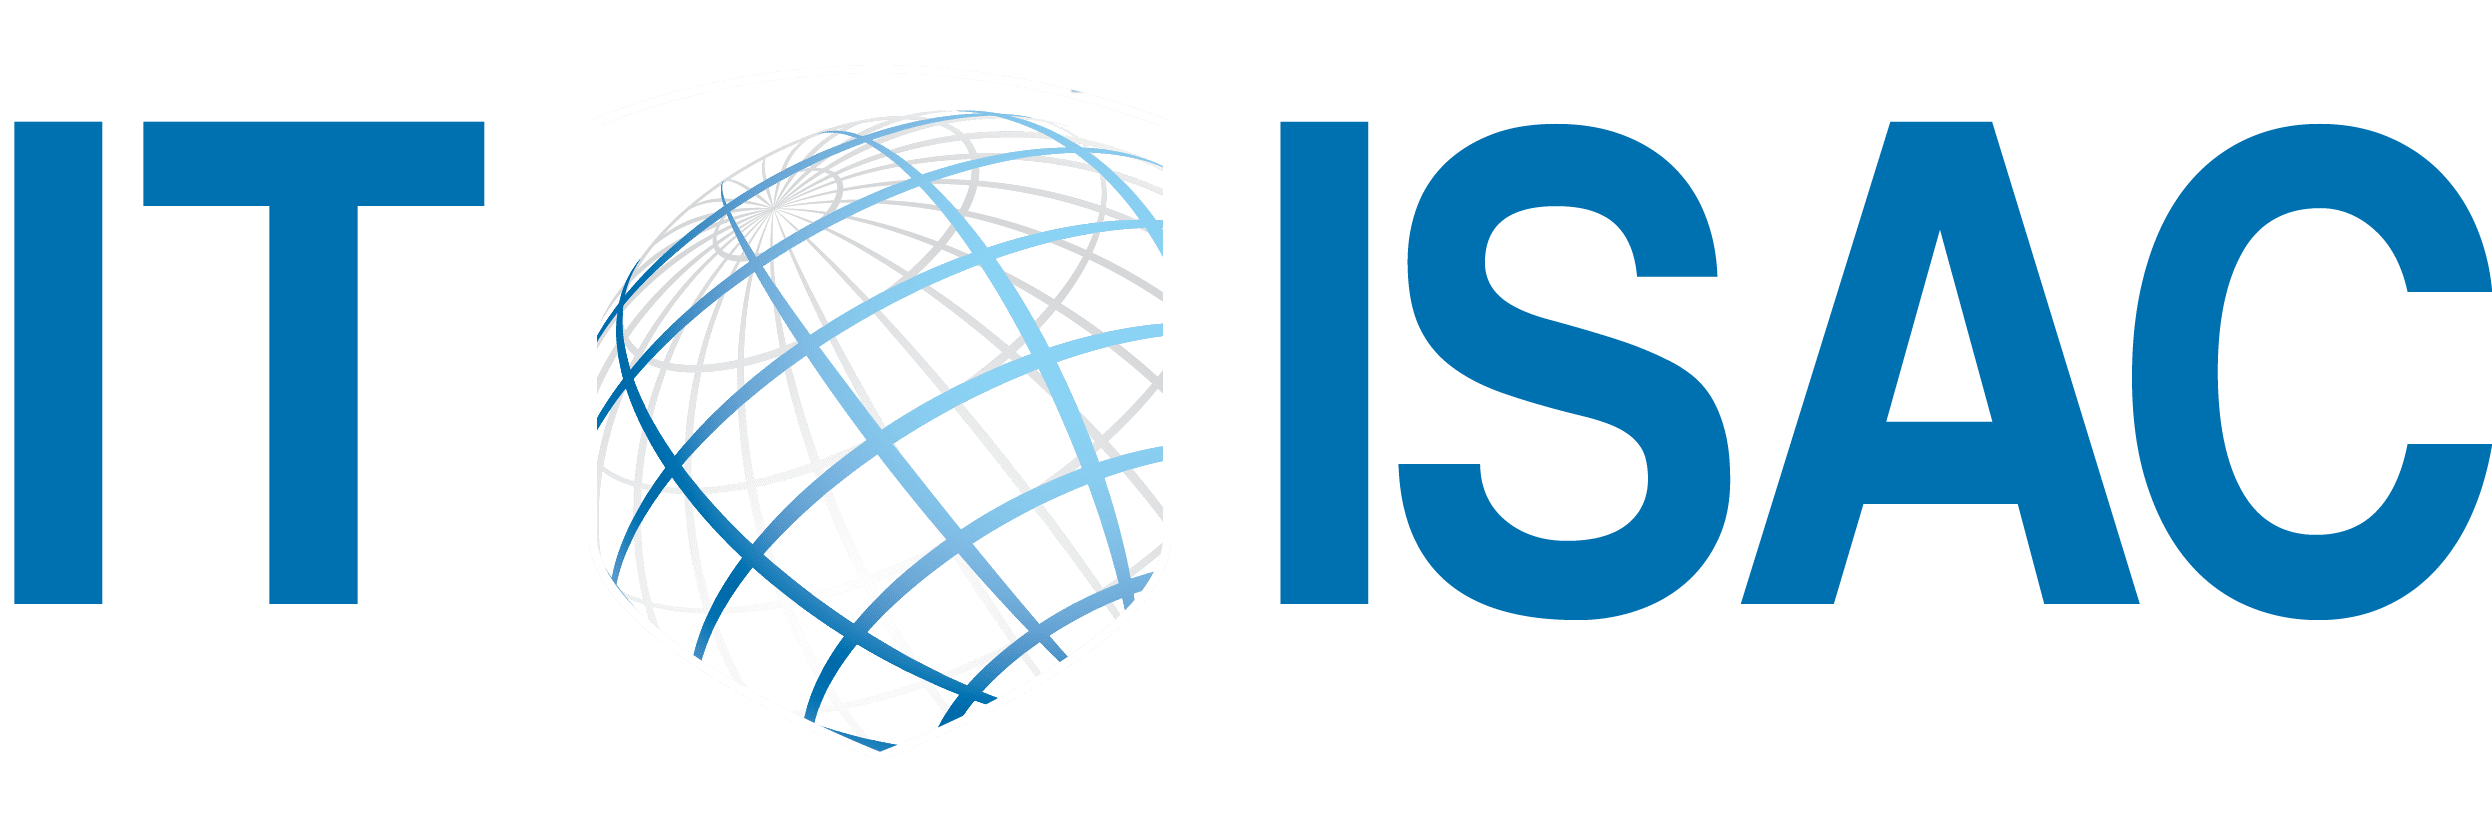 IT-ISAC-Logo-blue